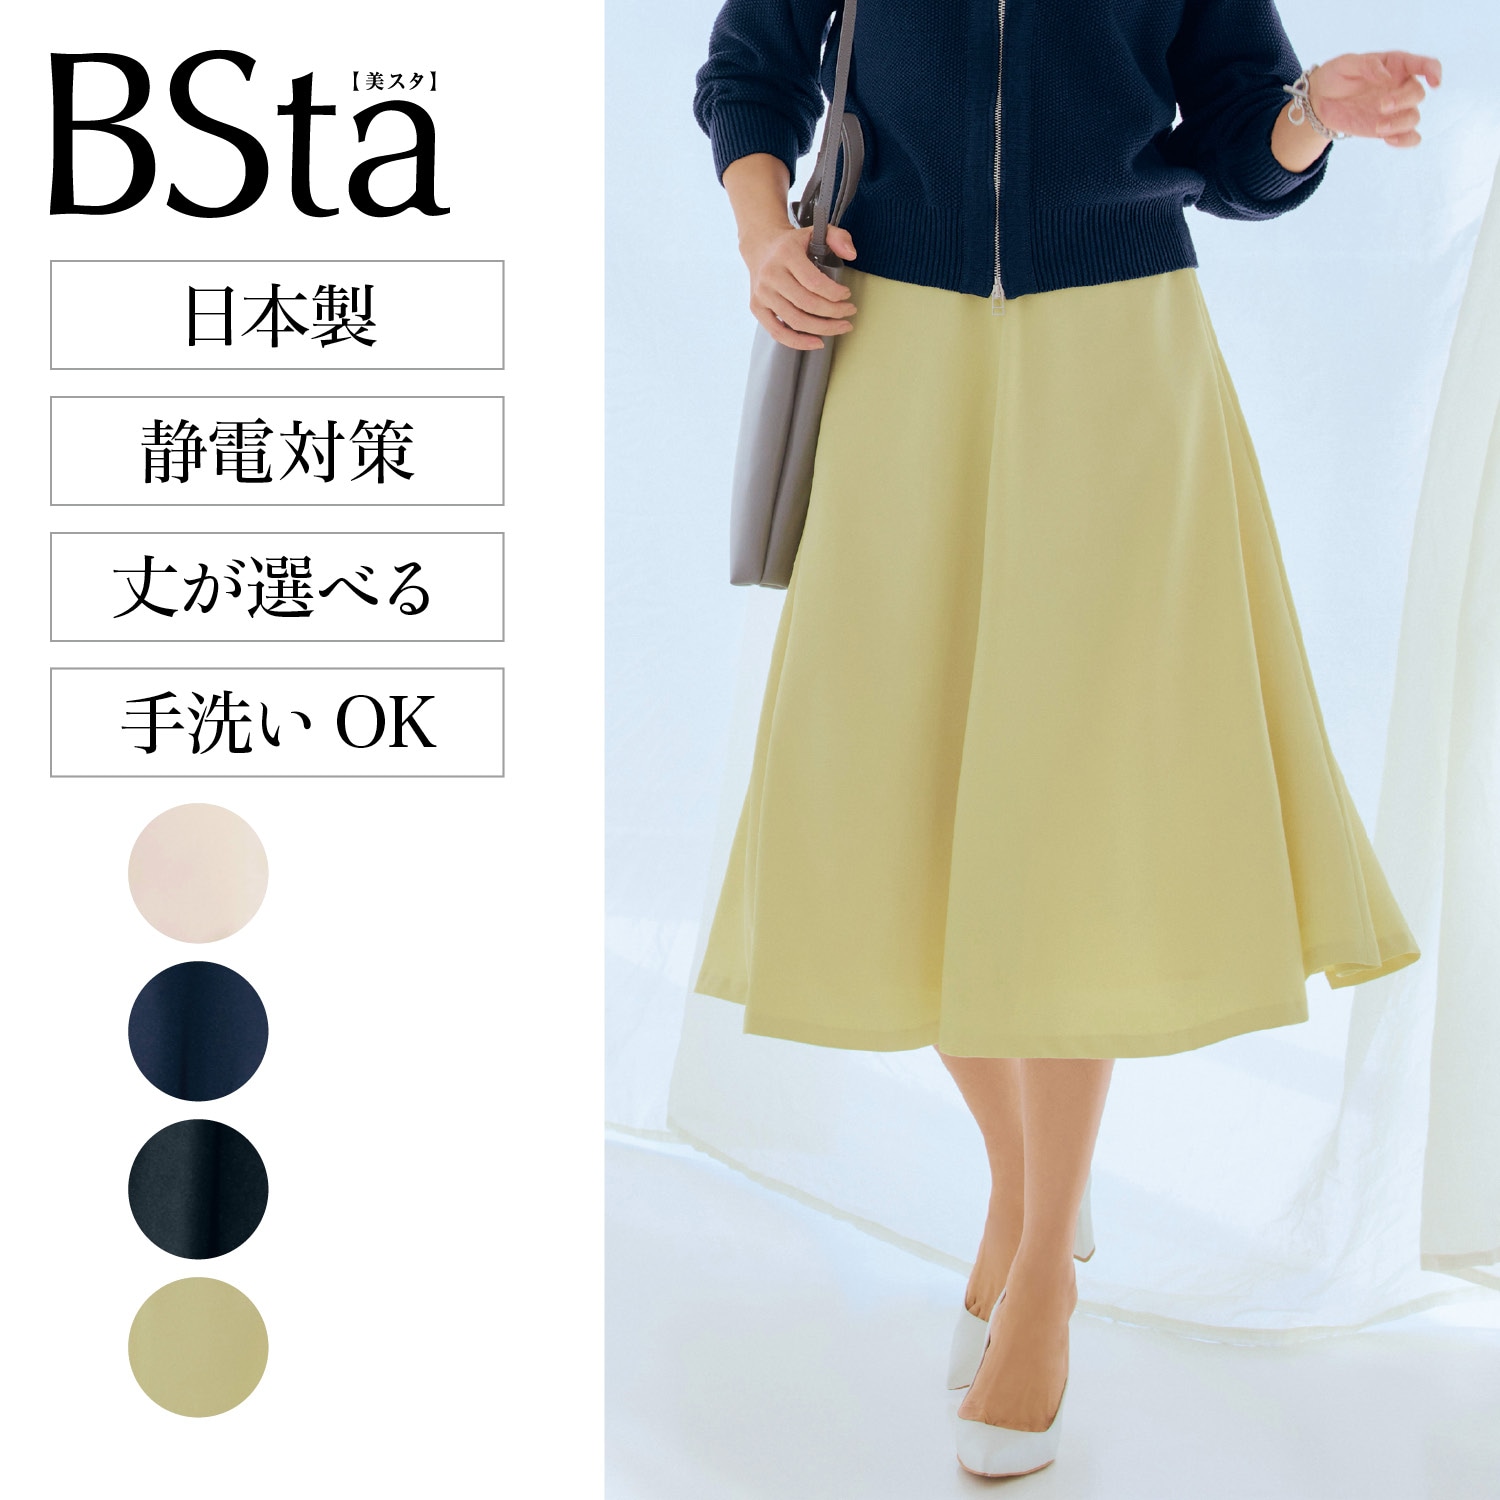 BSta】フレアスカート［日本製］（フレア/ギャザースカート